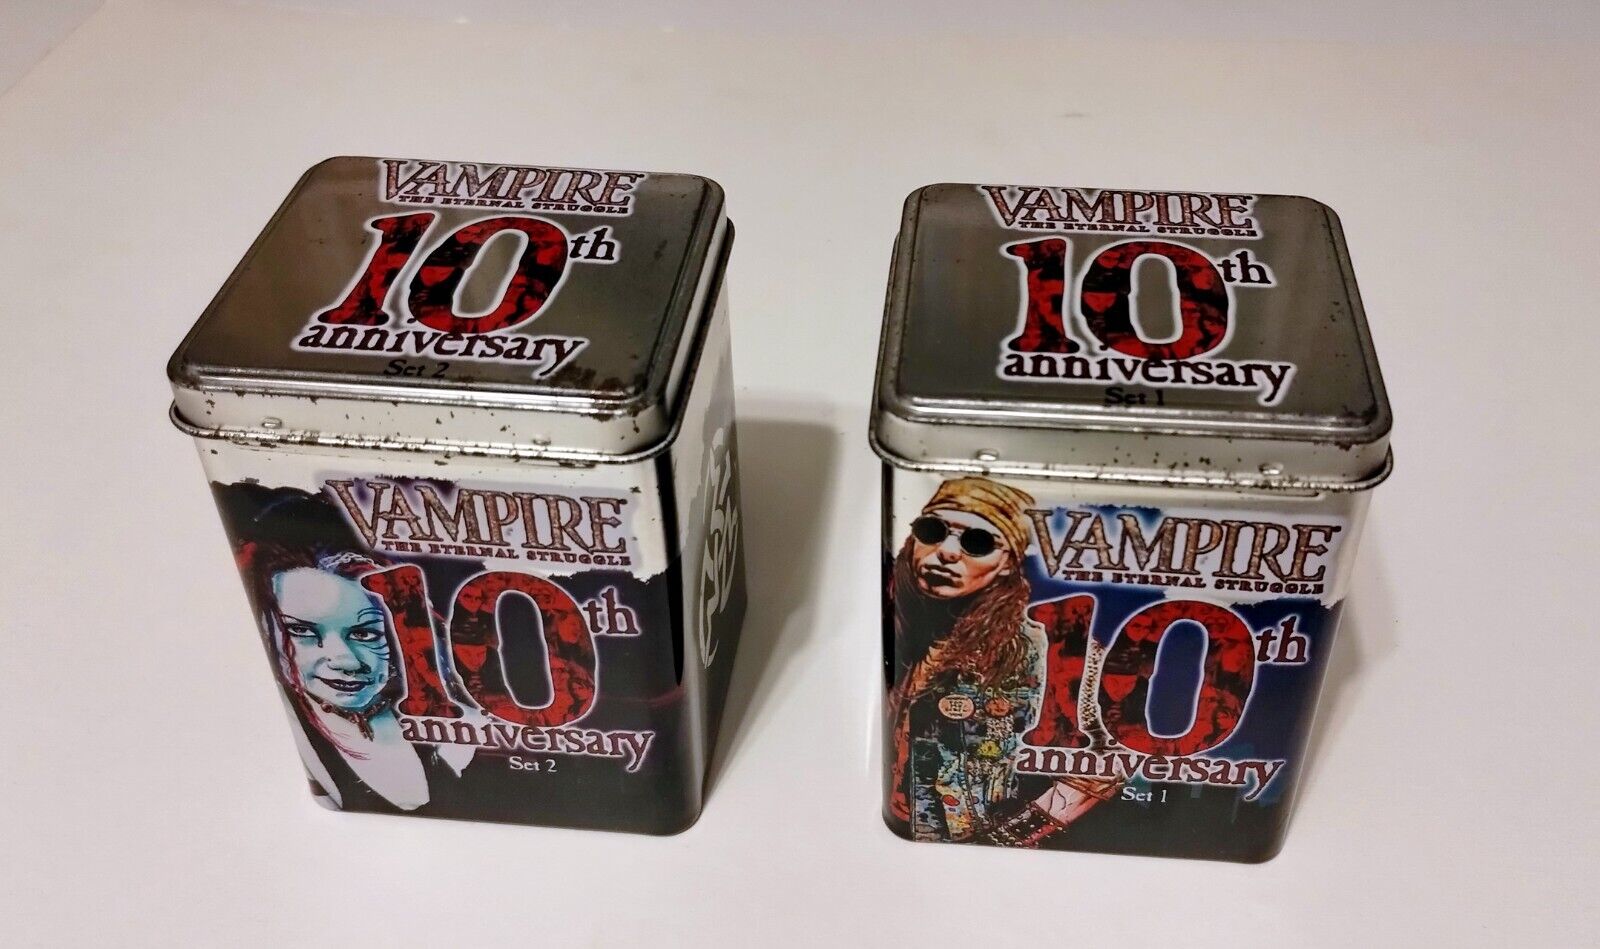 Vampire, Vtes, Jyhad - 10th Anniversary Set 1 and 2 in tin boxes